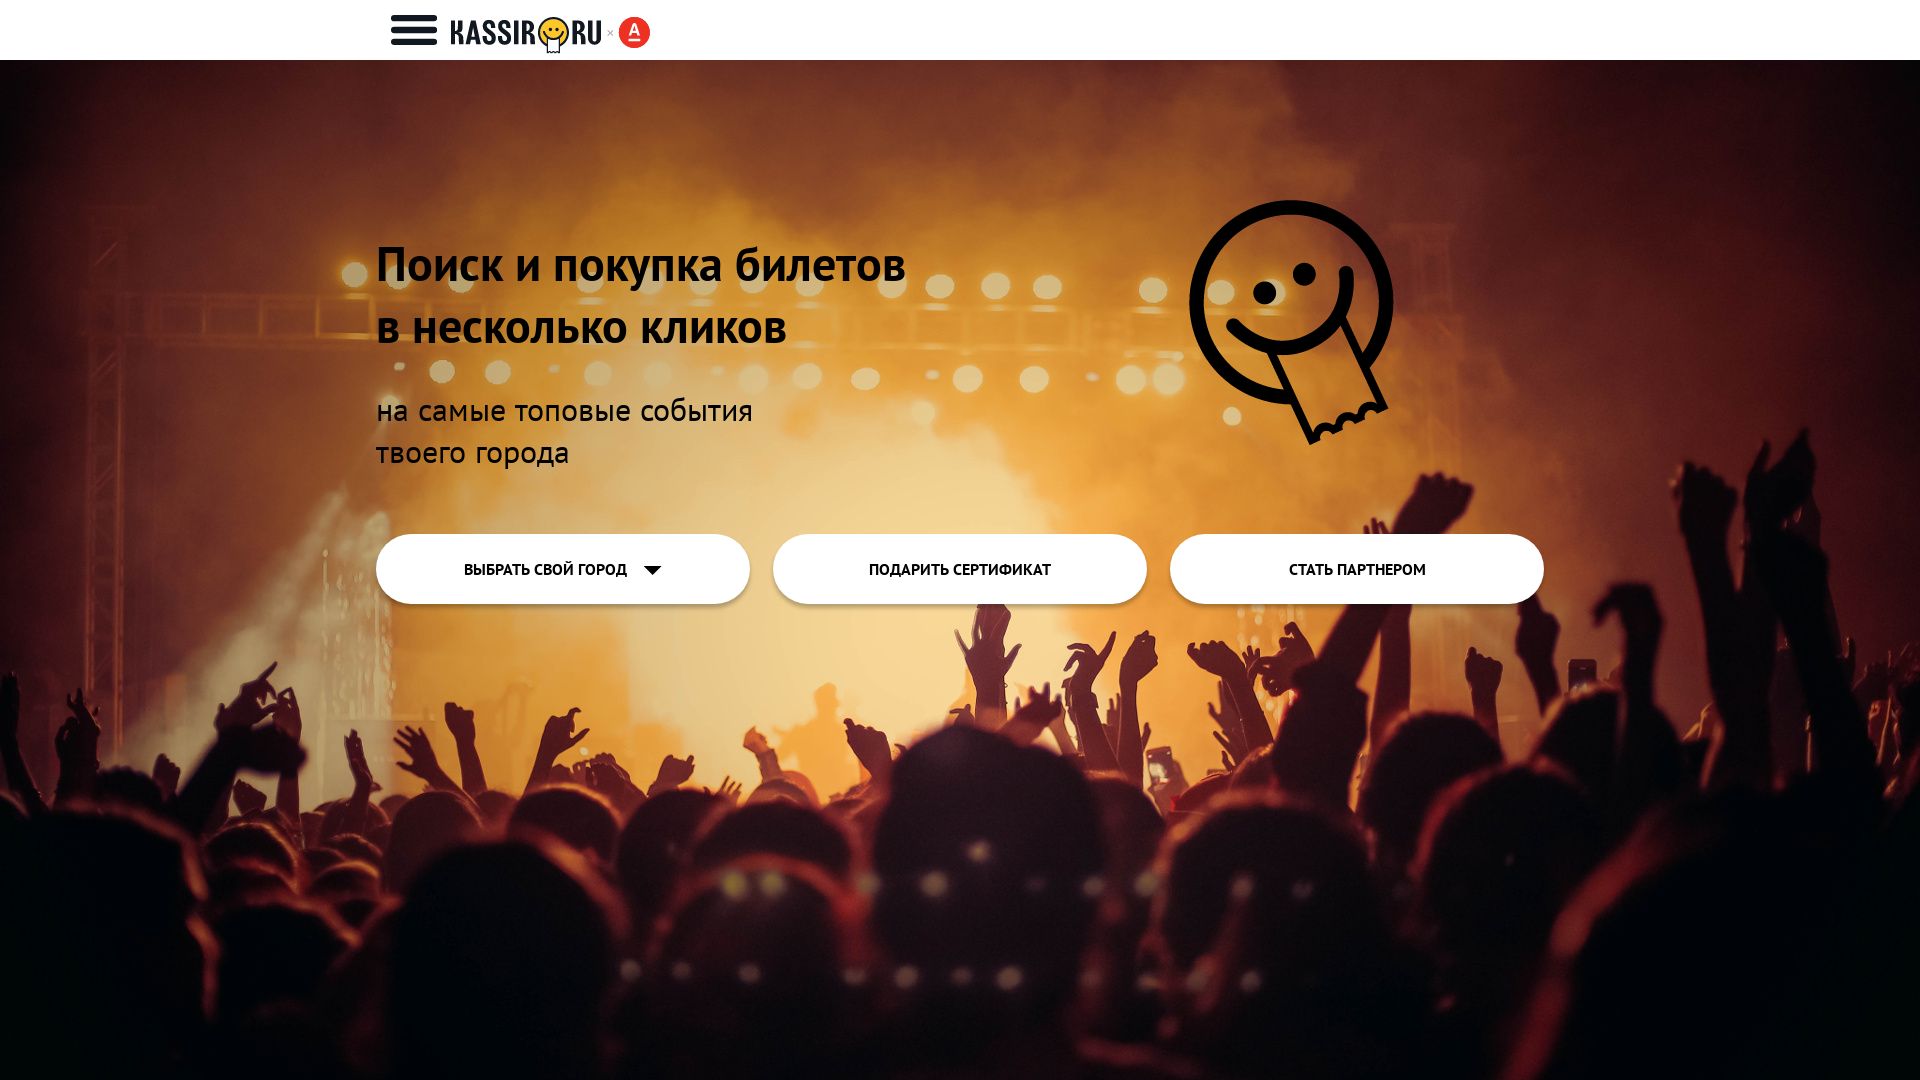 вебсайт kassir.ru Є   ONLINE